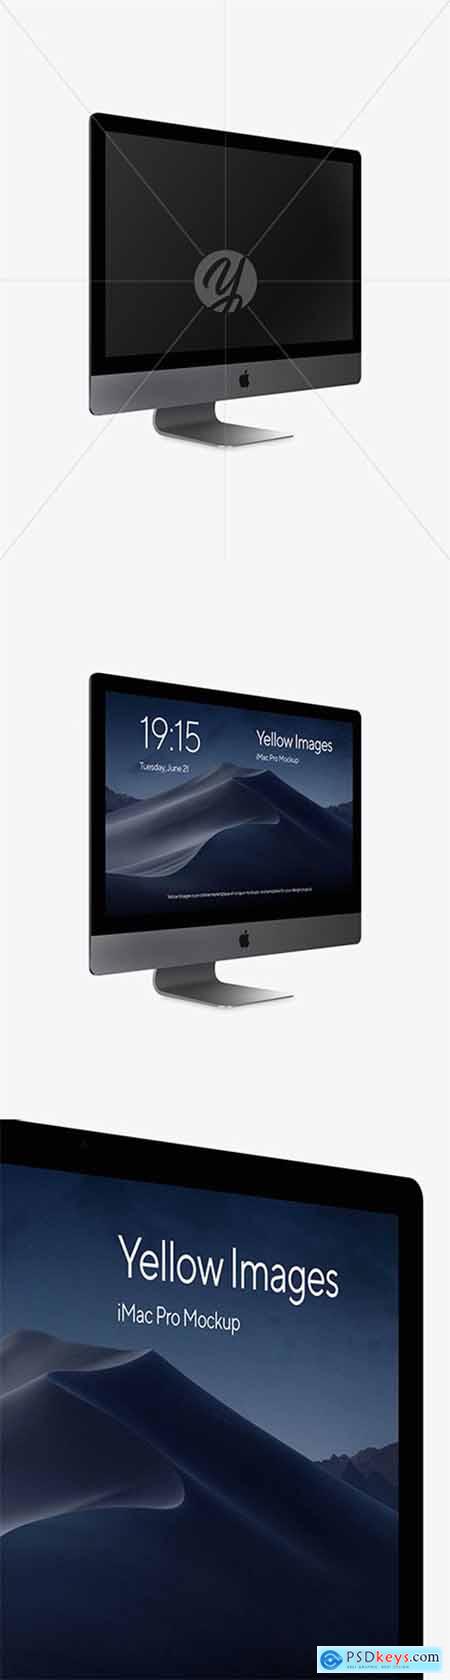 iMac Pro Space Gray Mockup 78987